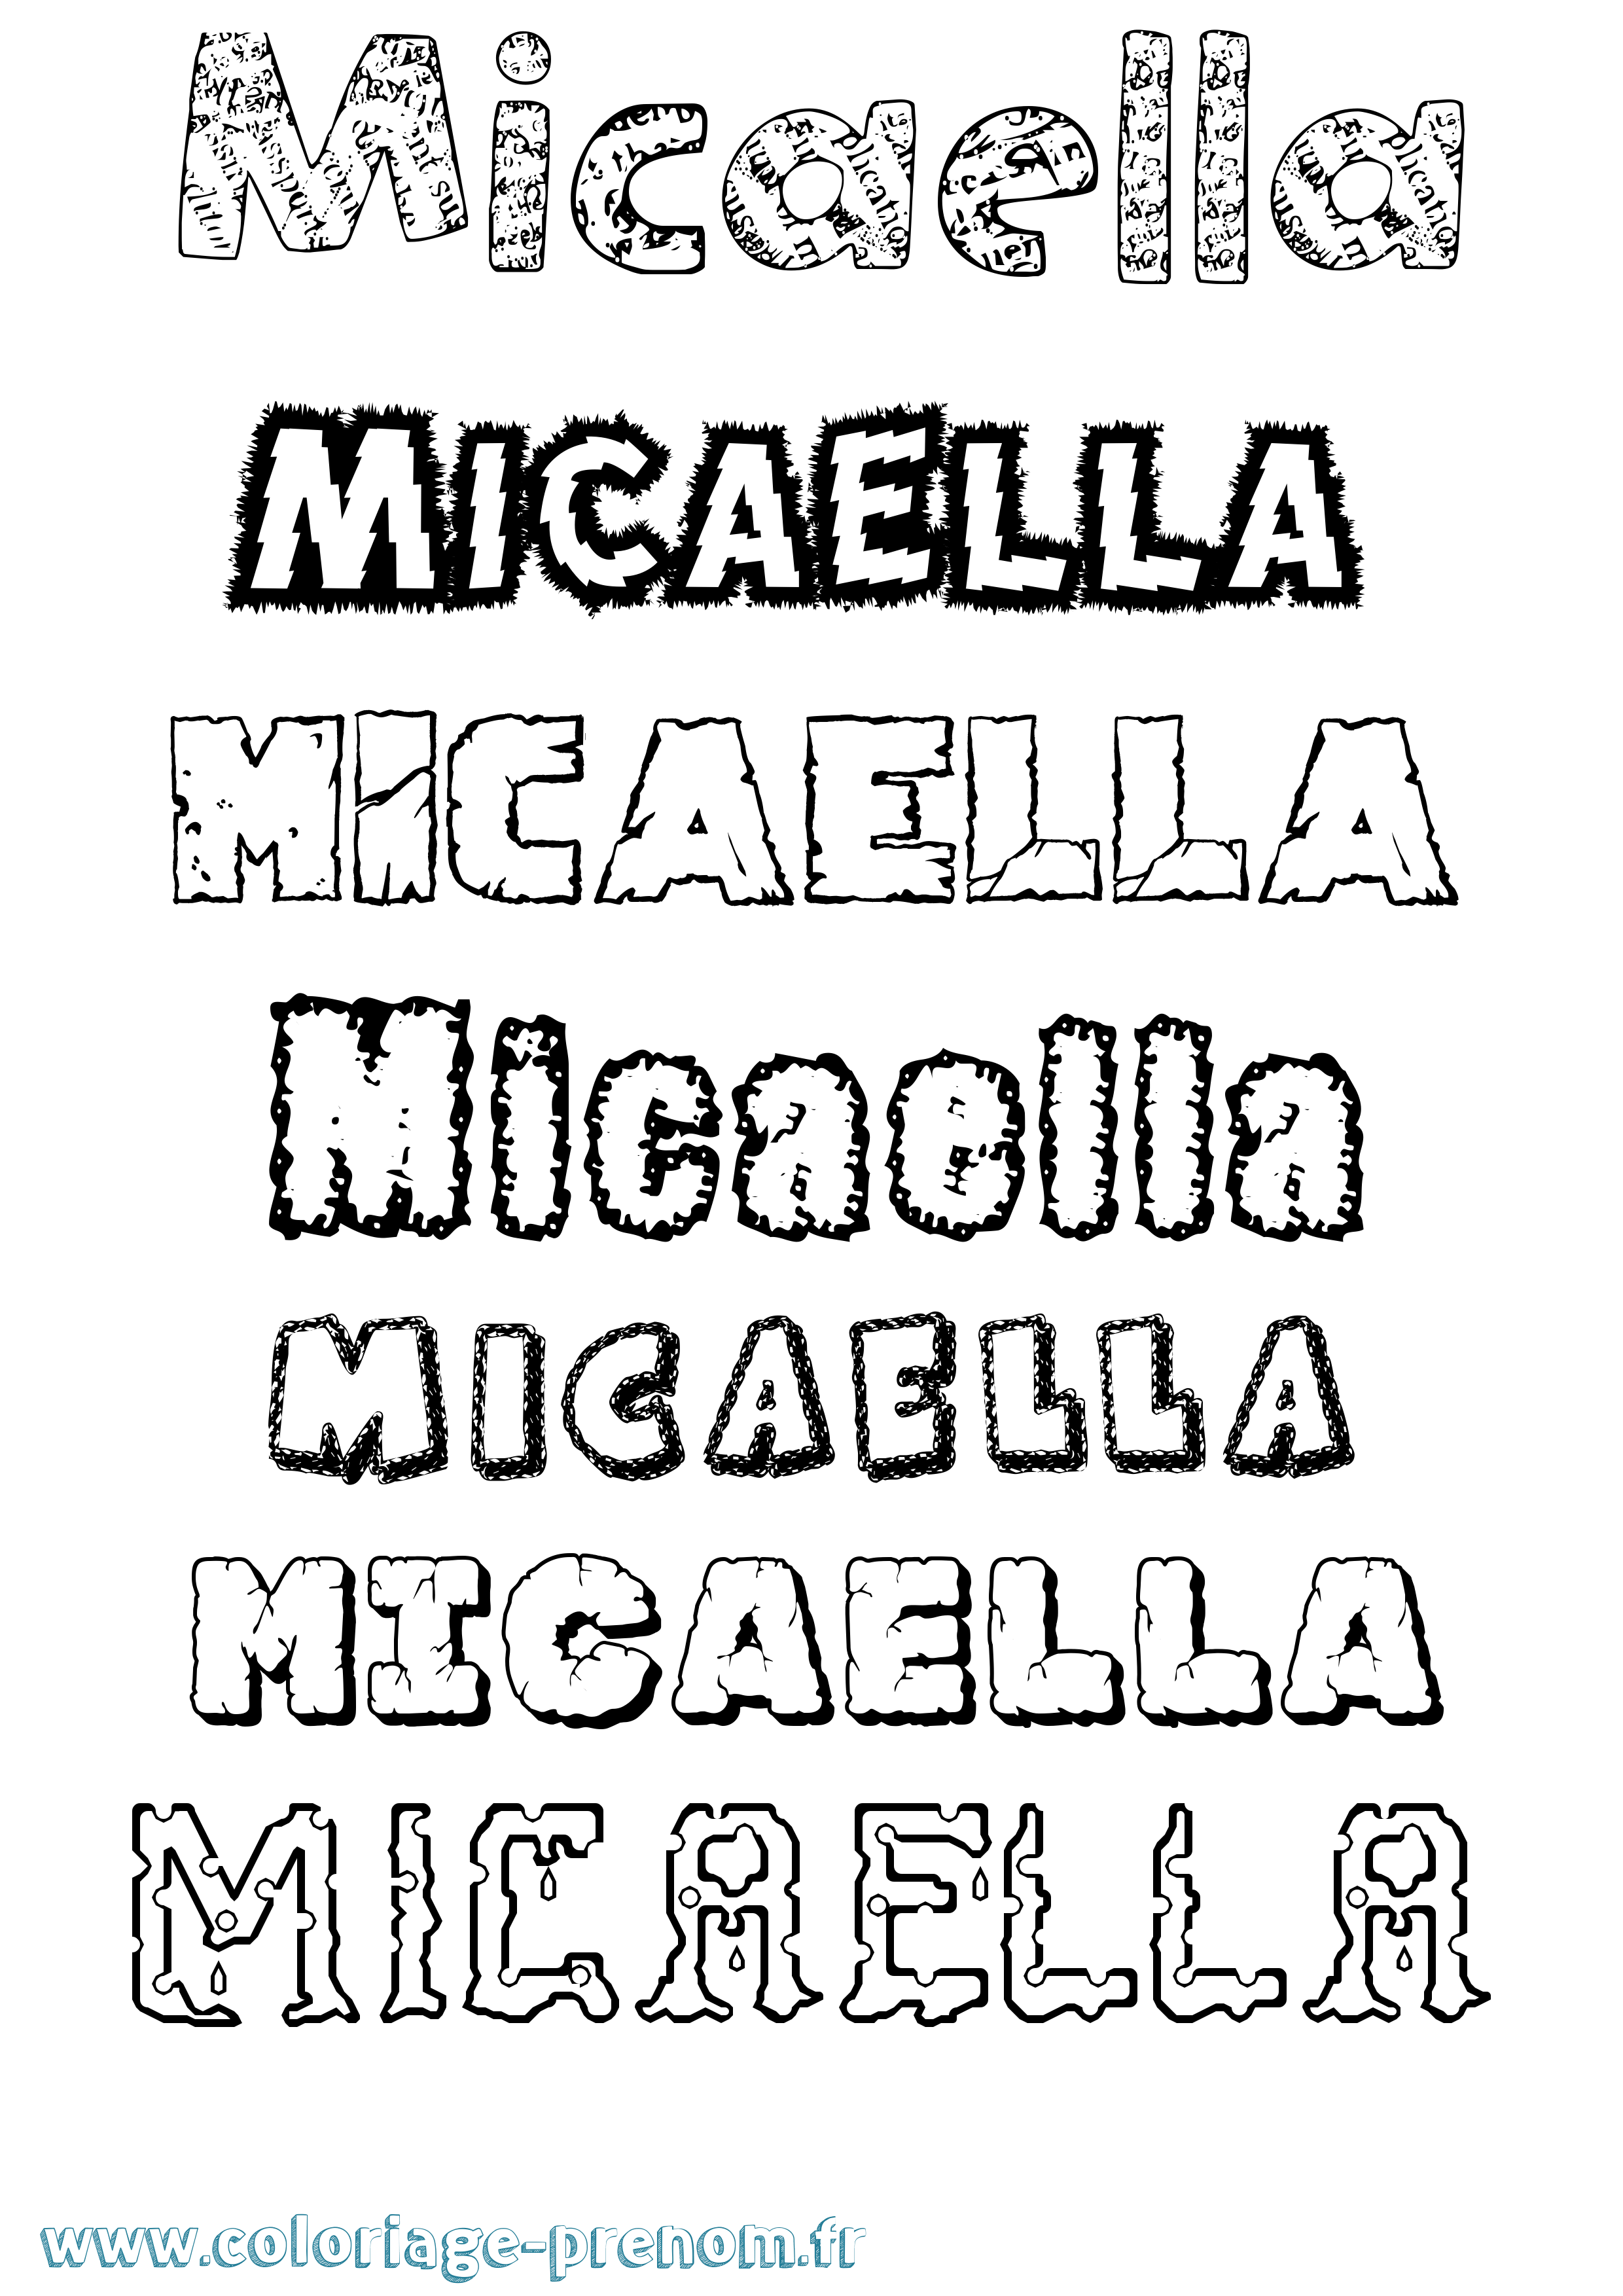 Coloriage prénom Micaella Destructuré